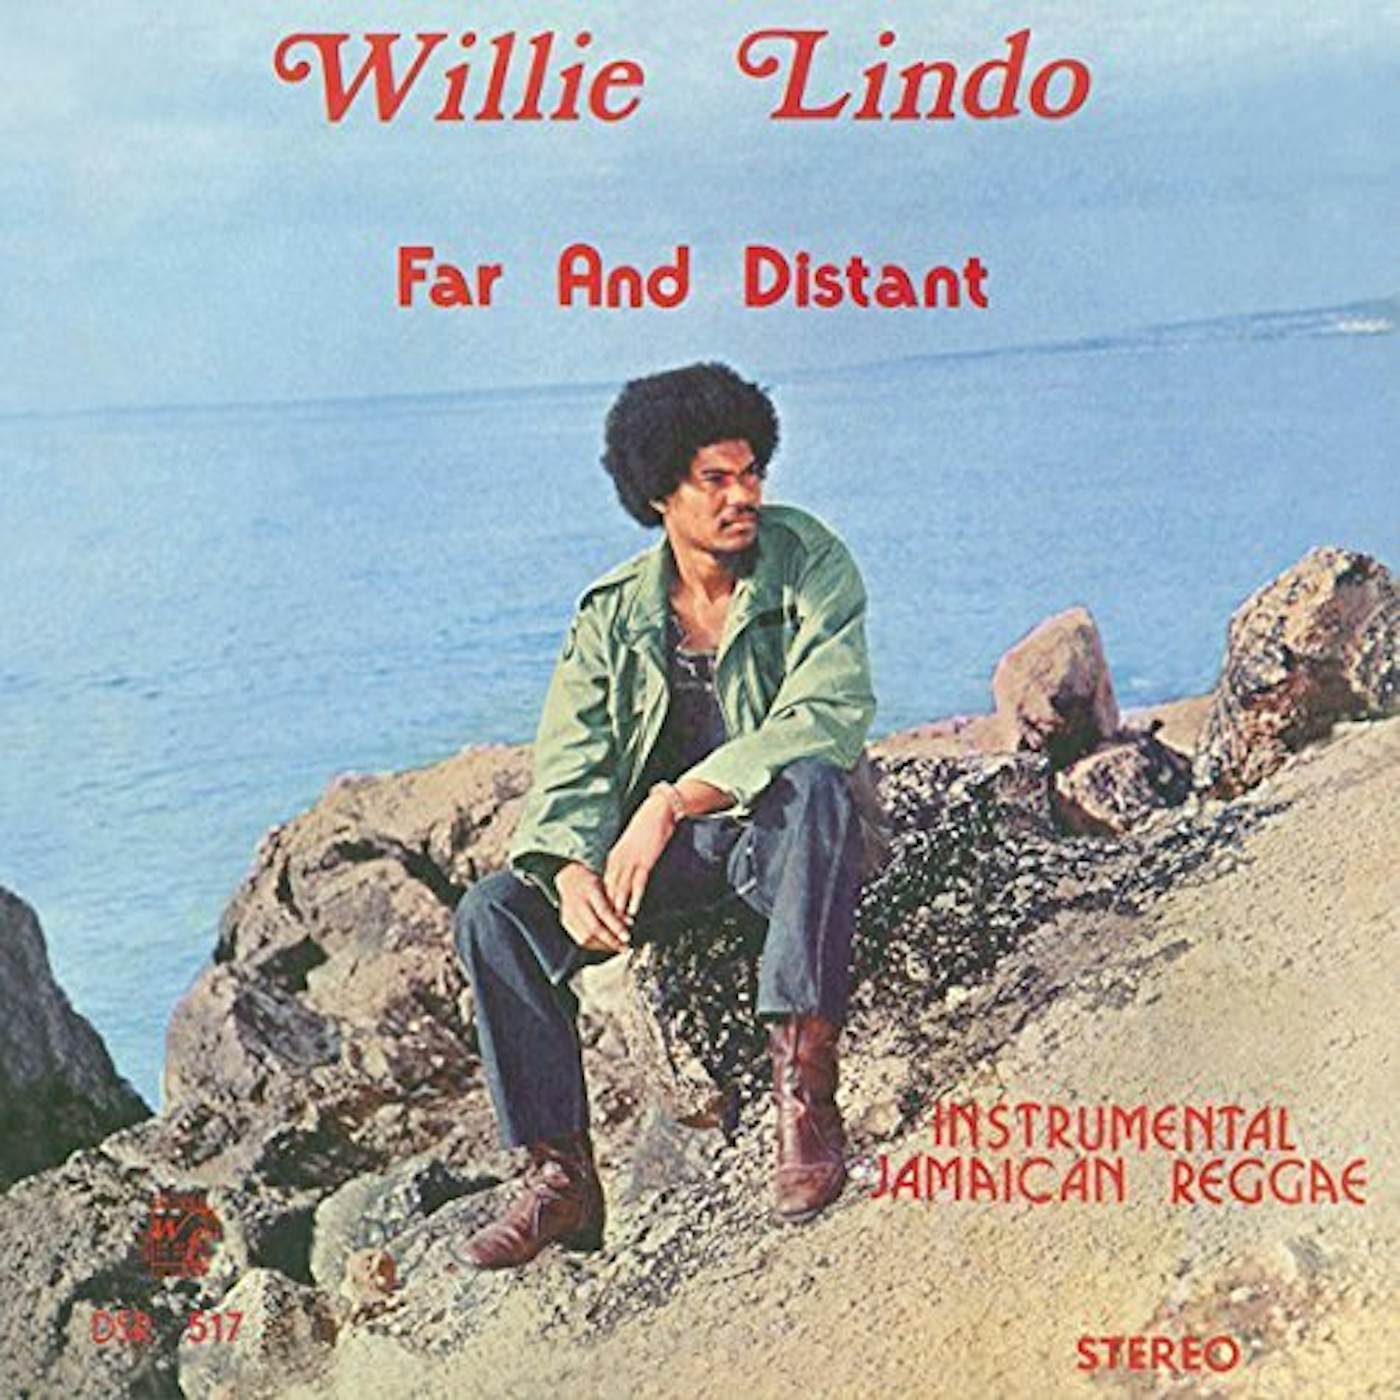 Willie Lindo FAR & DISTANT CD